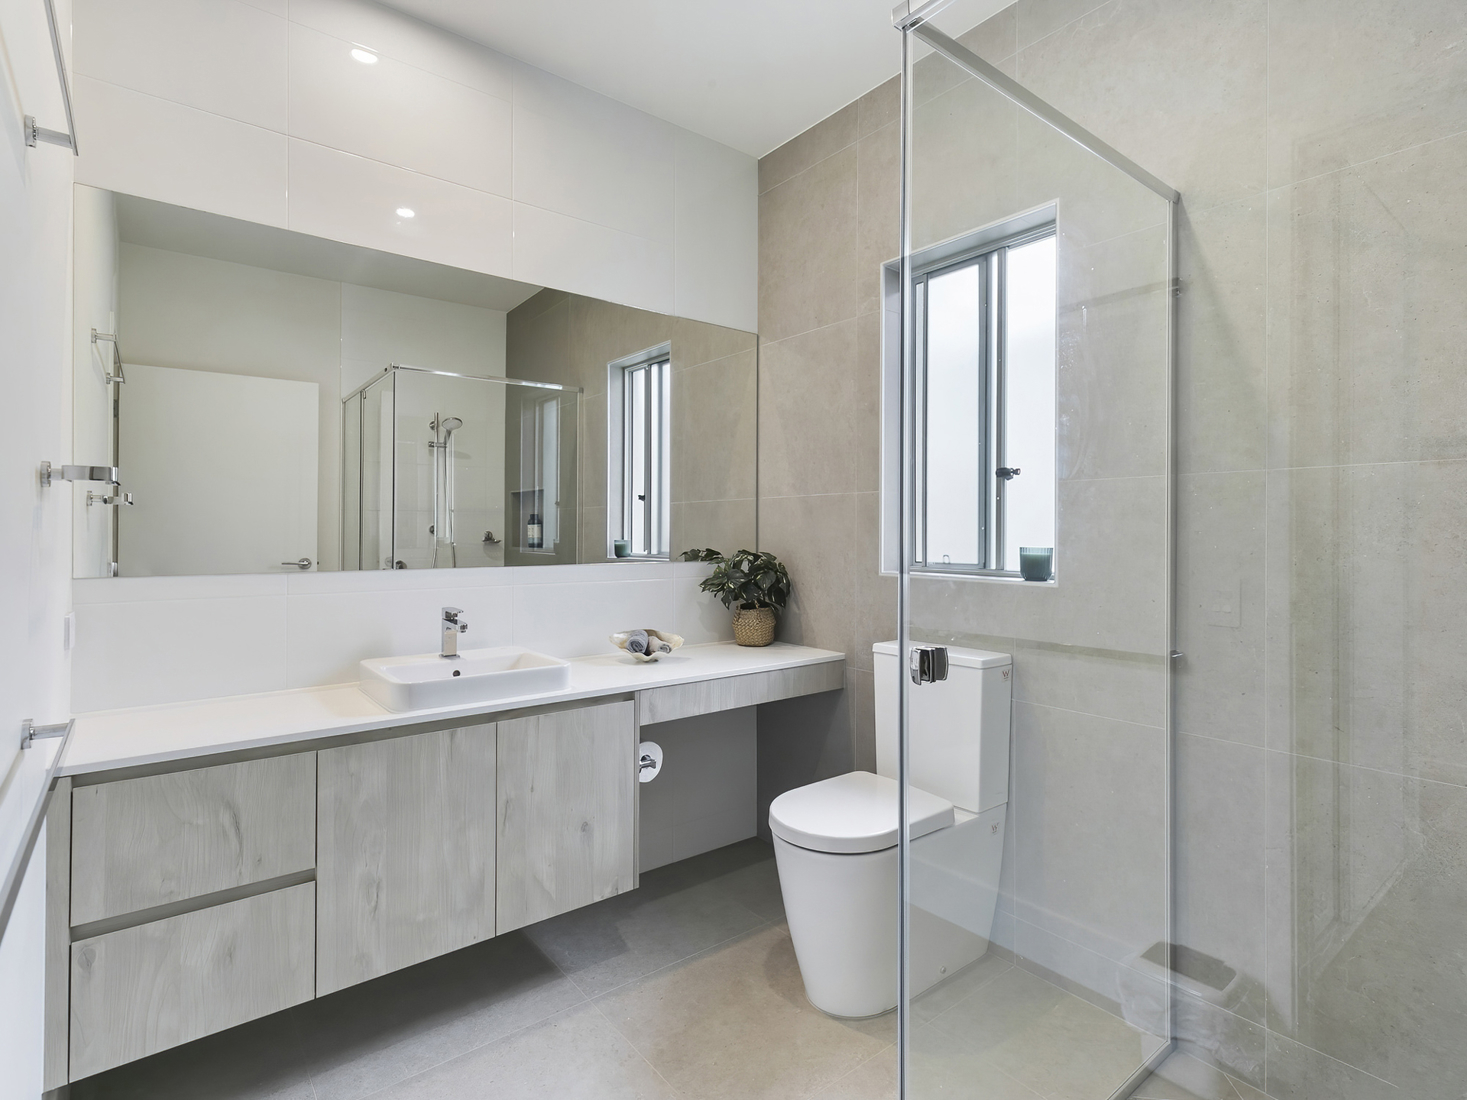 Modern established bathroom with full length vanity bench, glass shower screen and beige tiling.